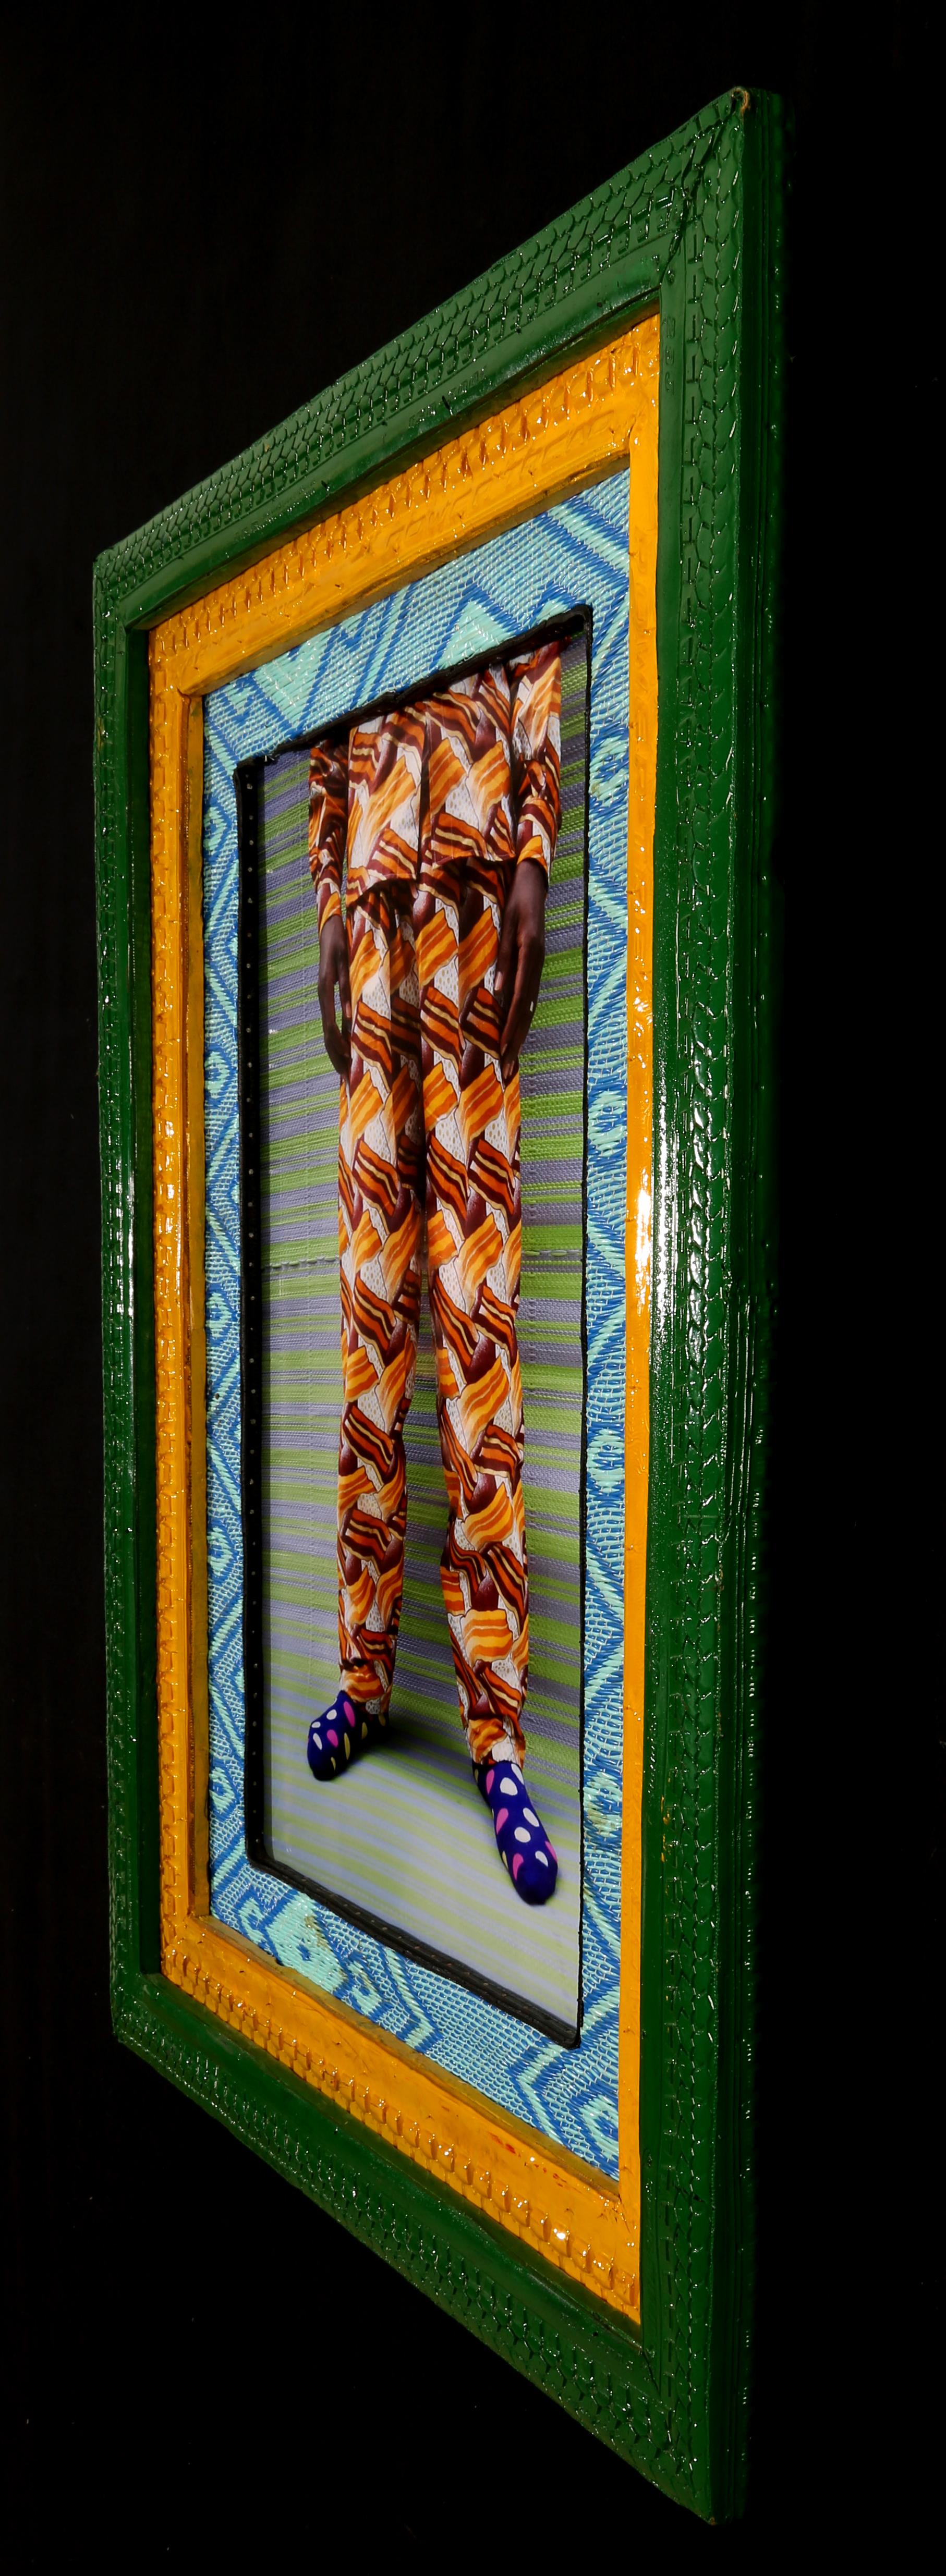 Hassan Hajjaj
Mali Kid Legs, 2014
Metallischer Lambda-Druck auf 3mm Dibond
40 3/10 x 31 Zoll  (102,4 x 78,7 cm)
Auflage 2/5